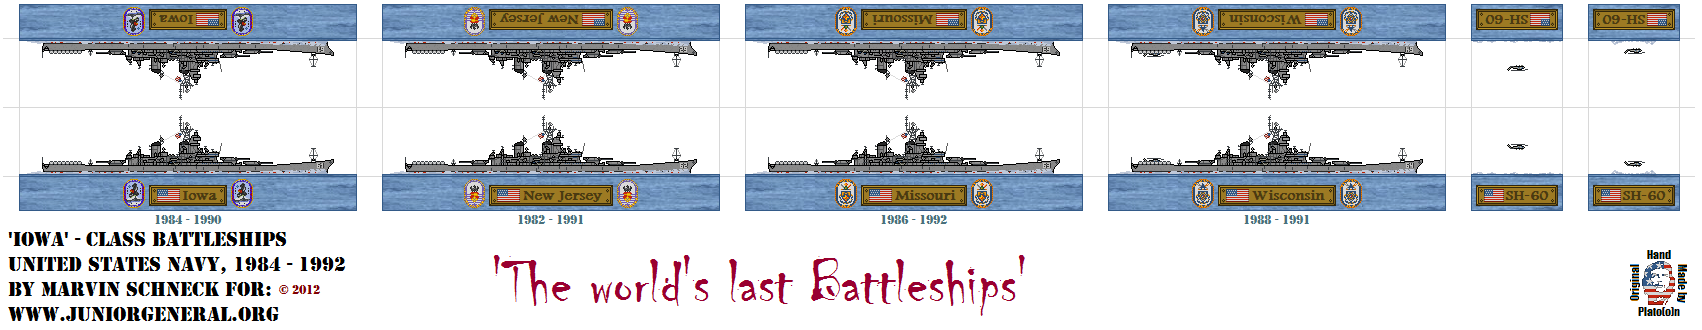 US Battleships